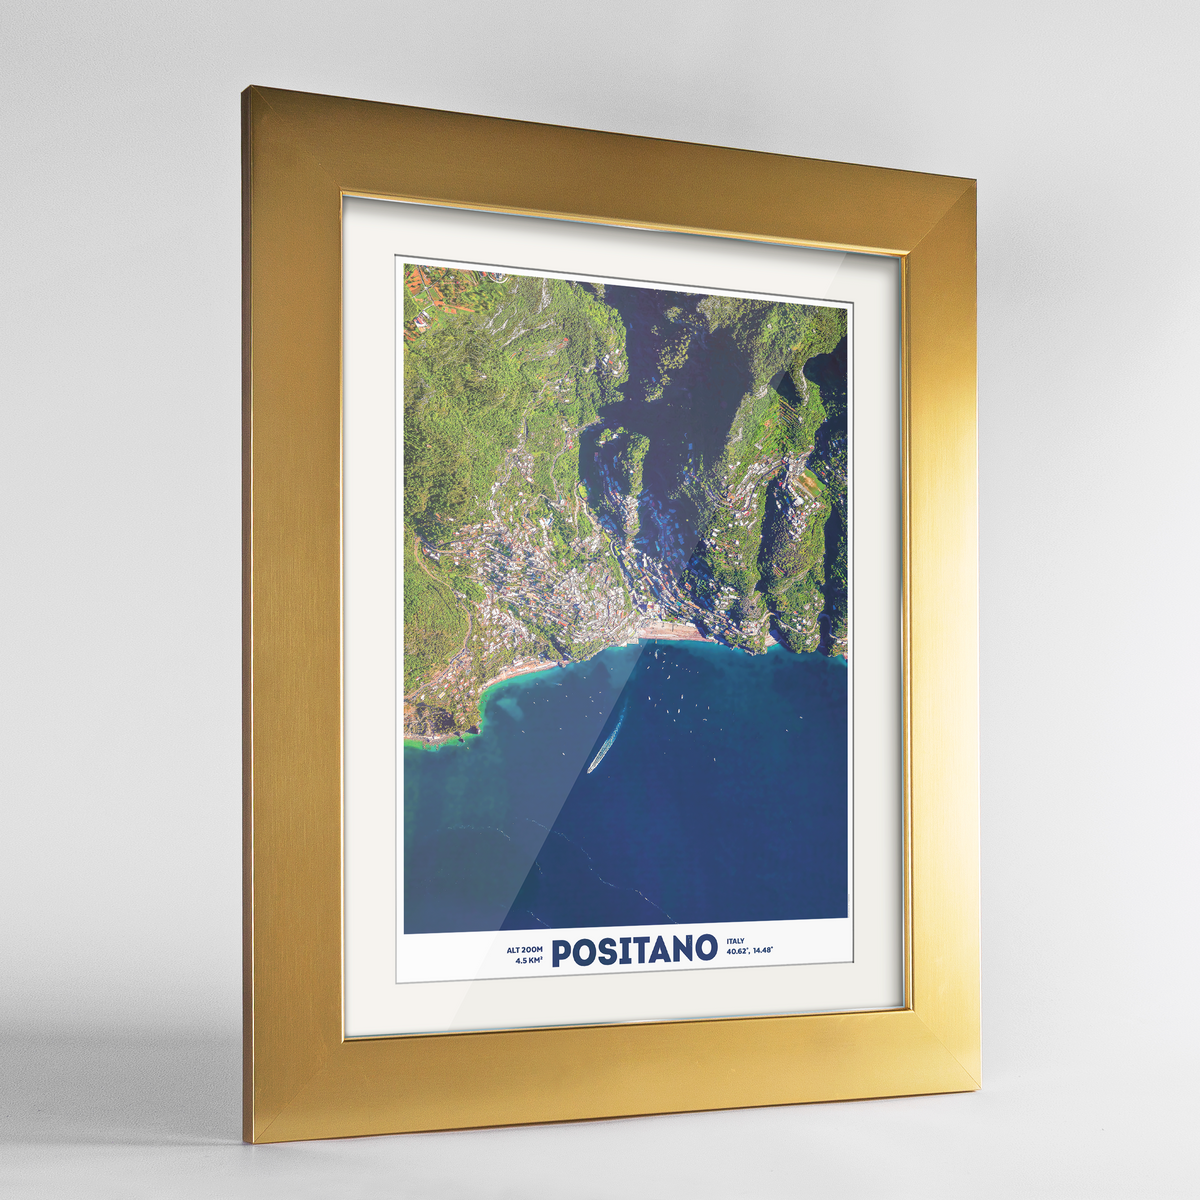 Positano Earth Photography Art Print - Framed